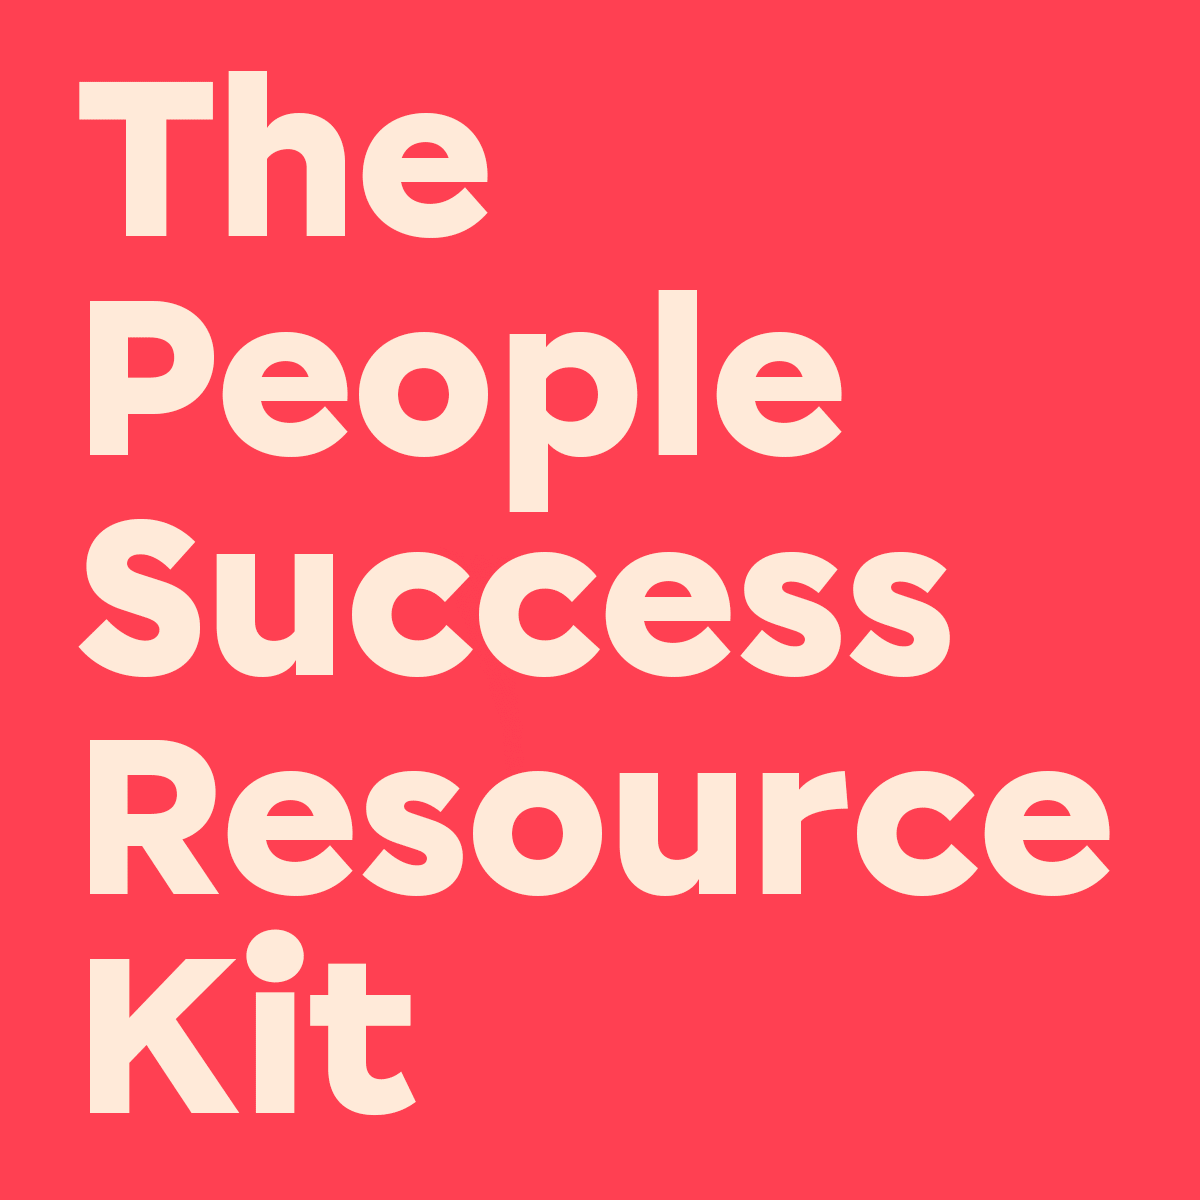 The People Success Resource Kit thumbnail image